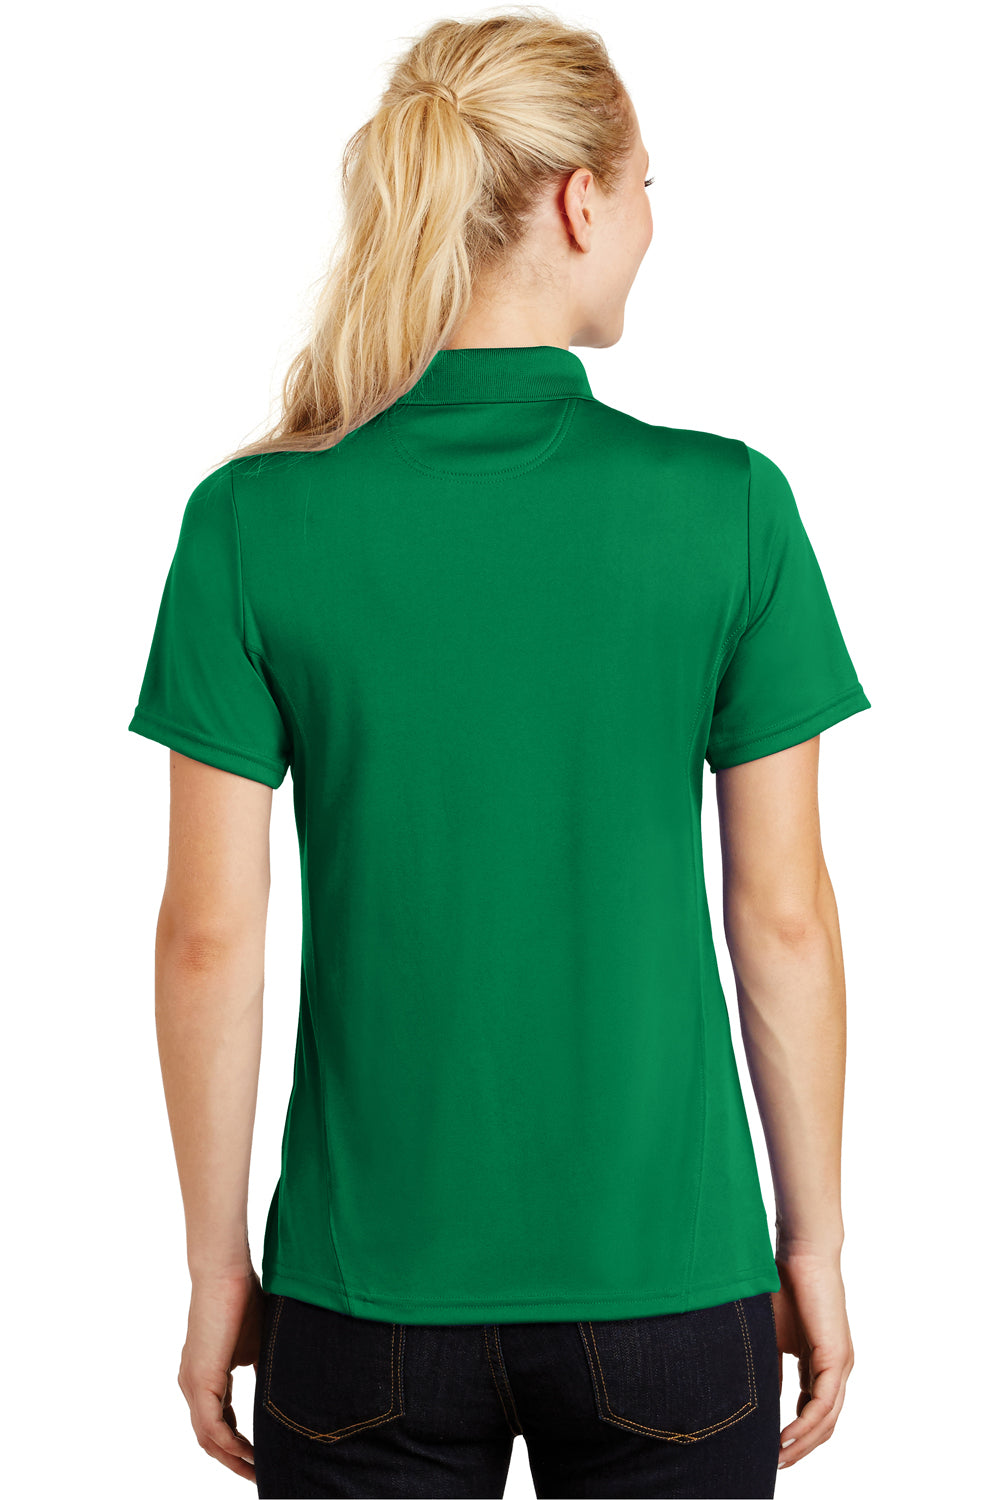 Sport-Tek L475 Womens Dry Zone Moisture Wicking Short Sleeve Polo Shirt Kelly Green Back